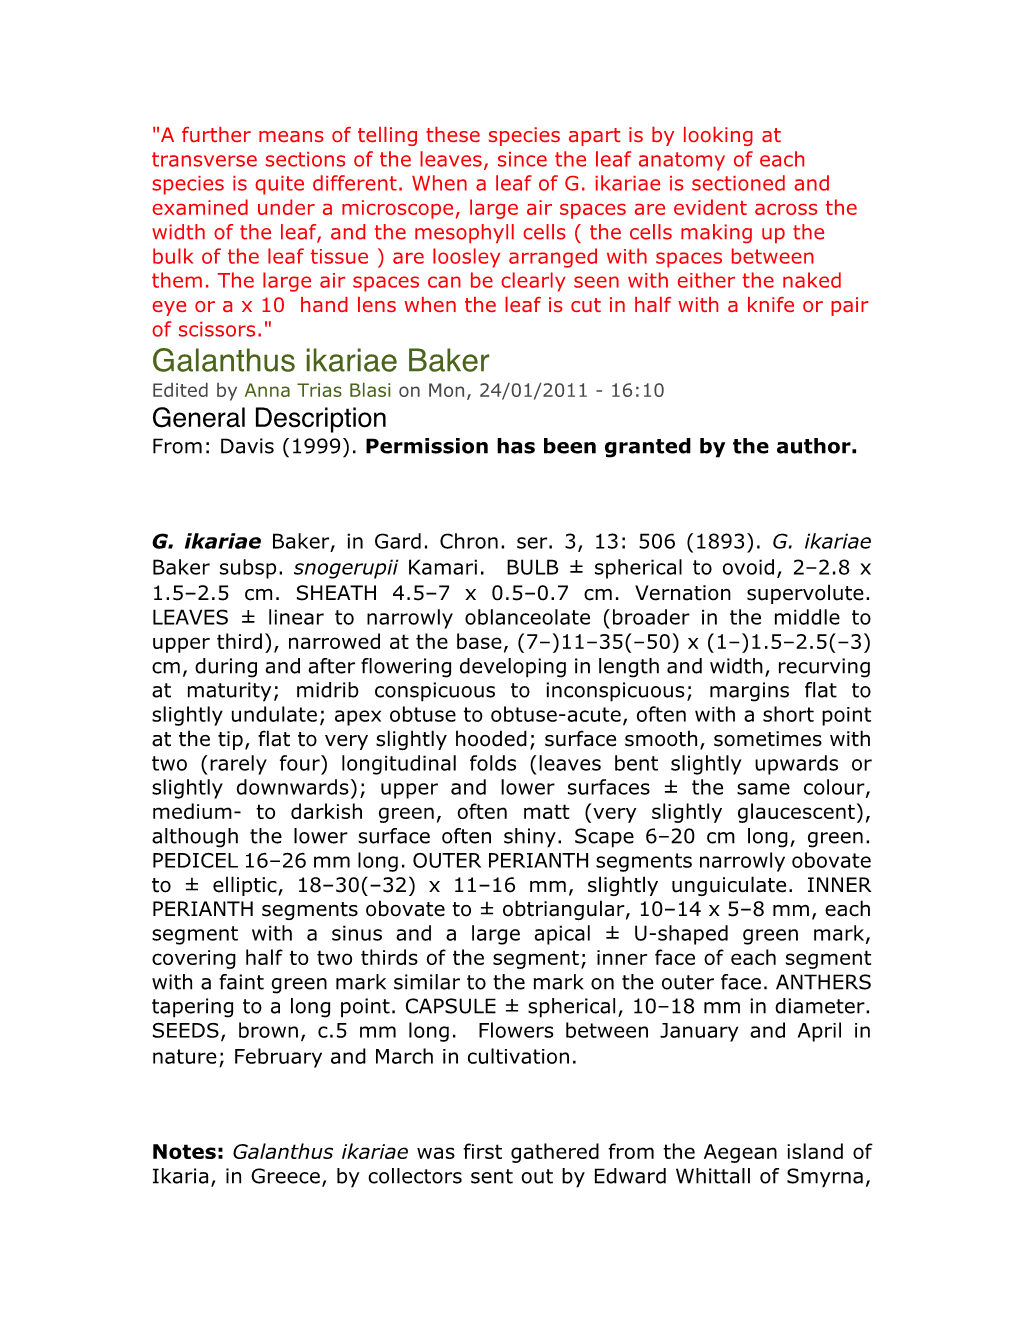 Galanthus Ikariae Baker Edited by Anna Trias Blasi on Mon, 24/01/2011 - 16:10 General Description From: Davis (1999)